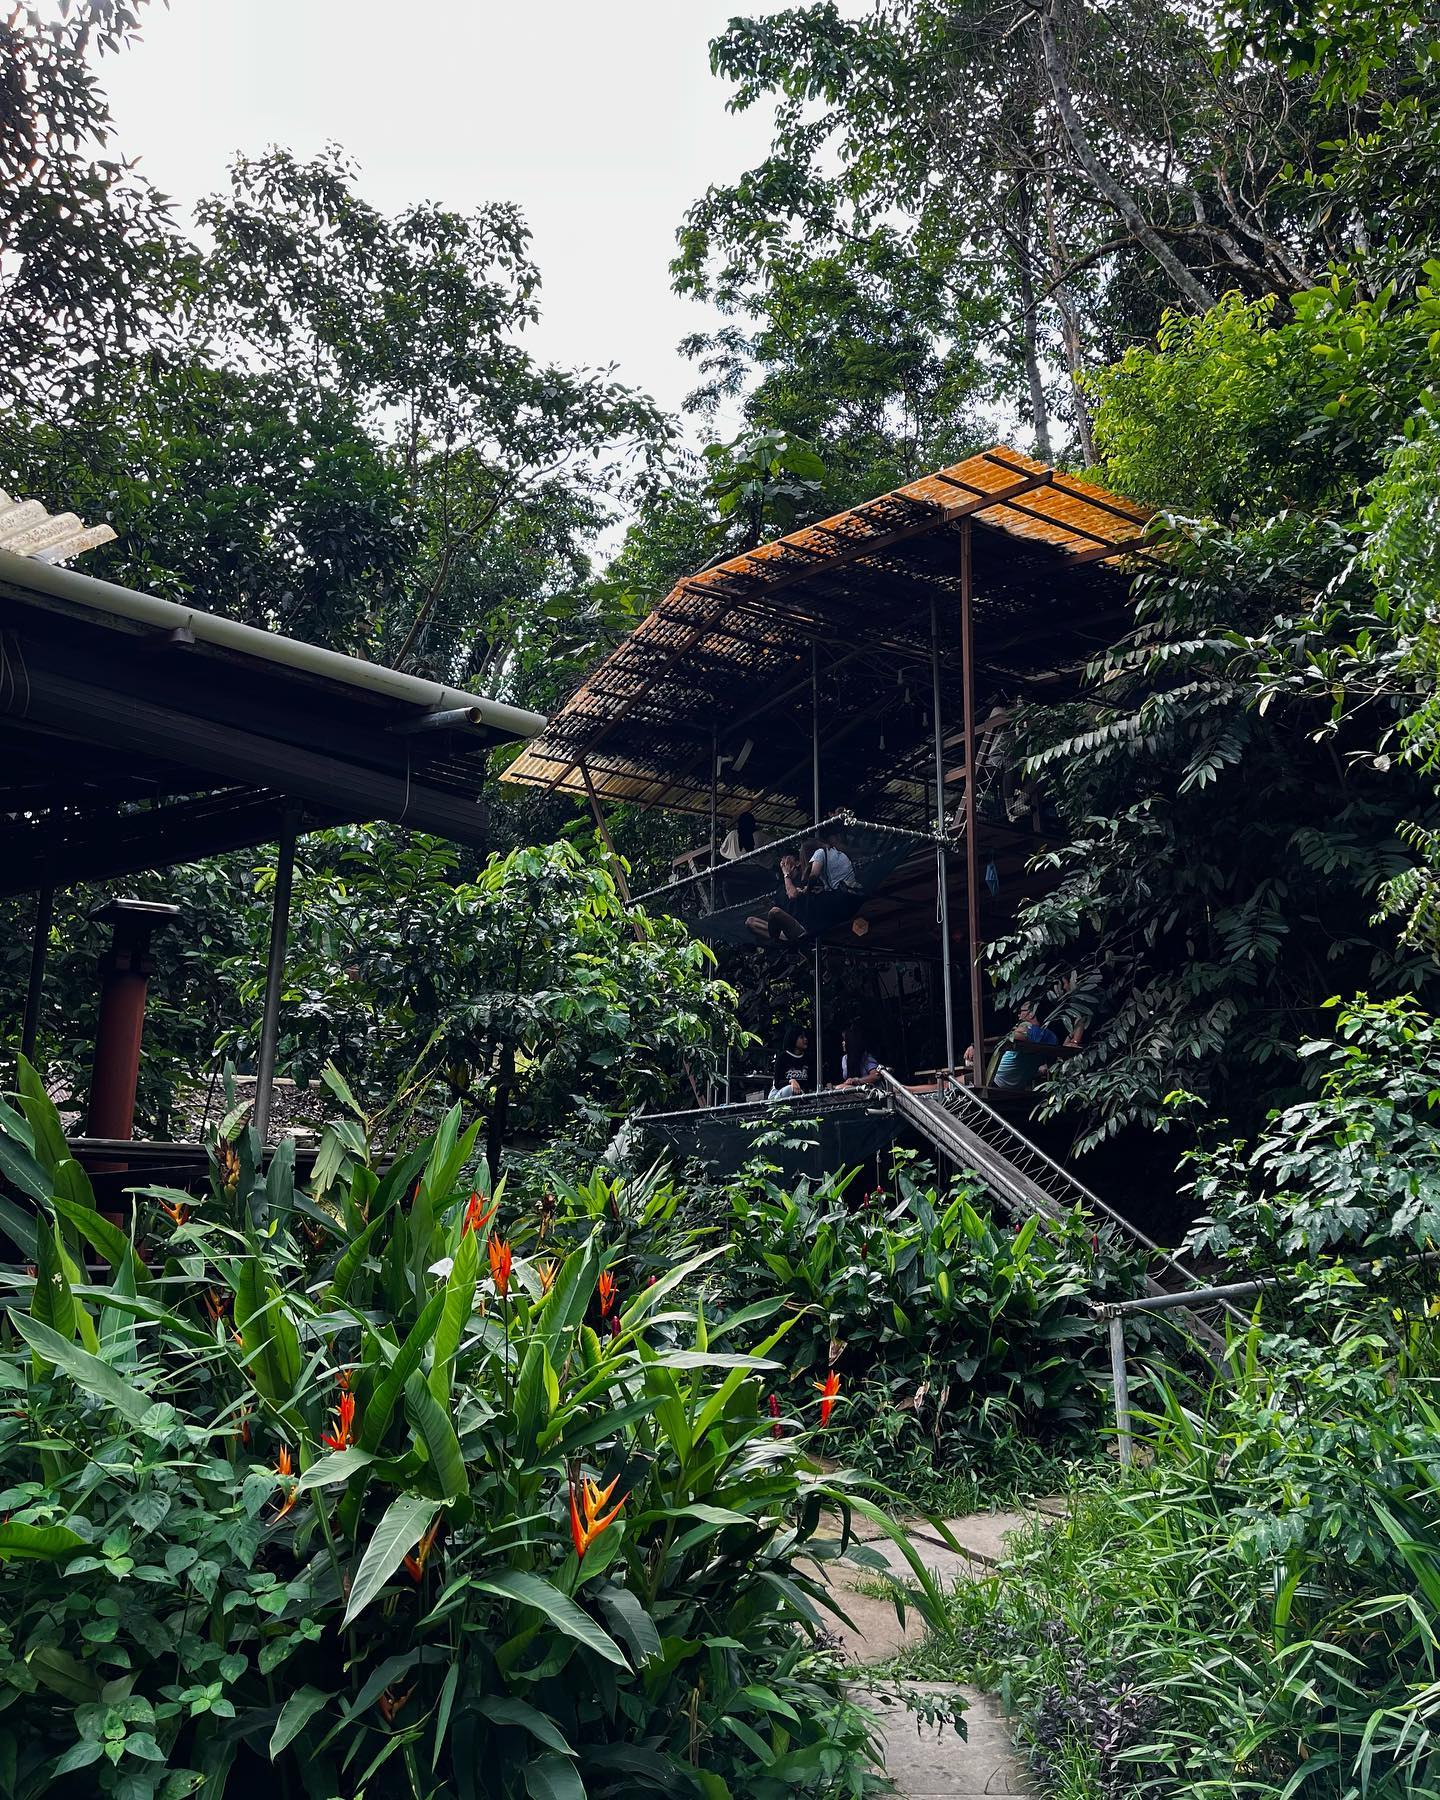 Nature-themed cafes near JB checkpoint - rainforest treehouse